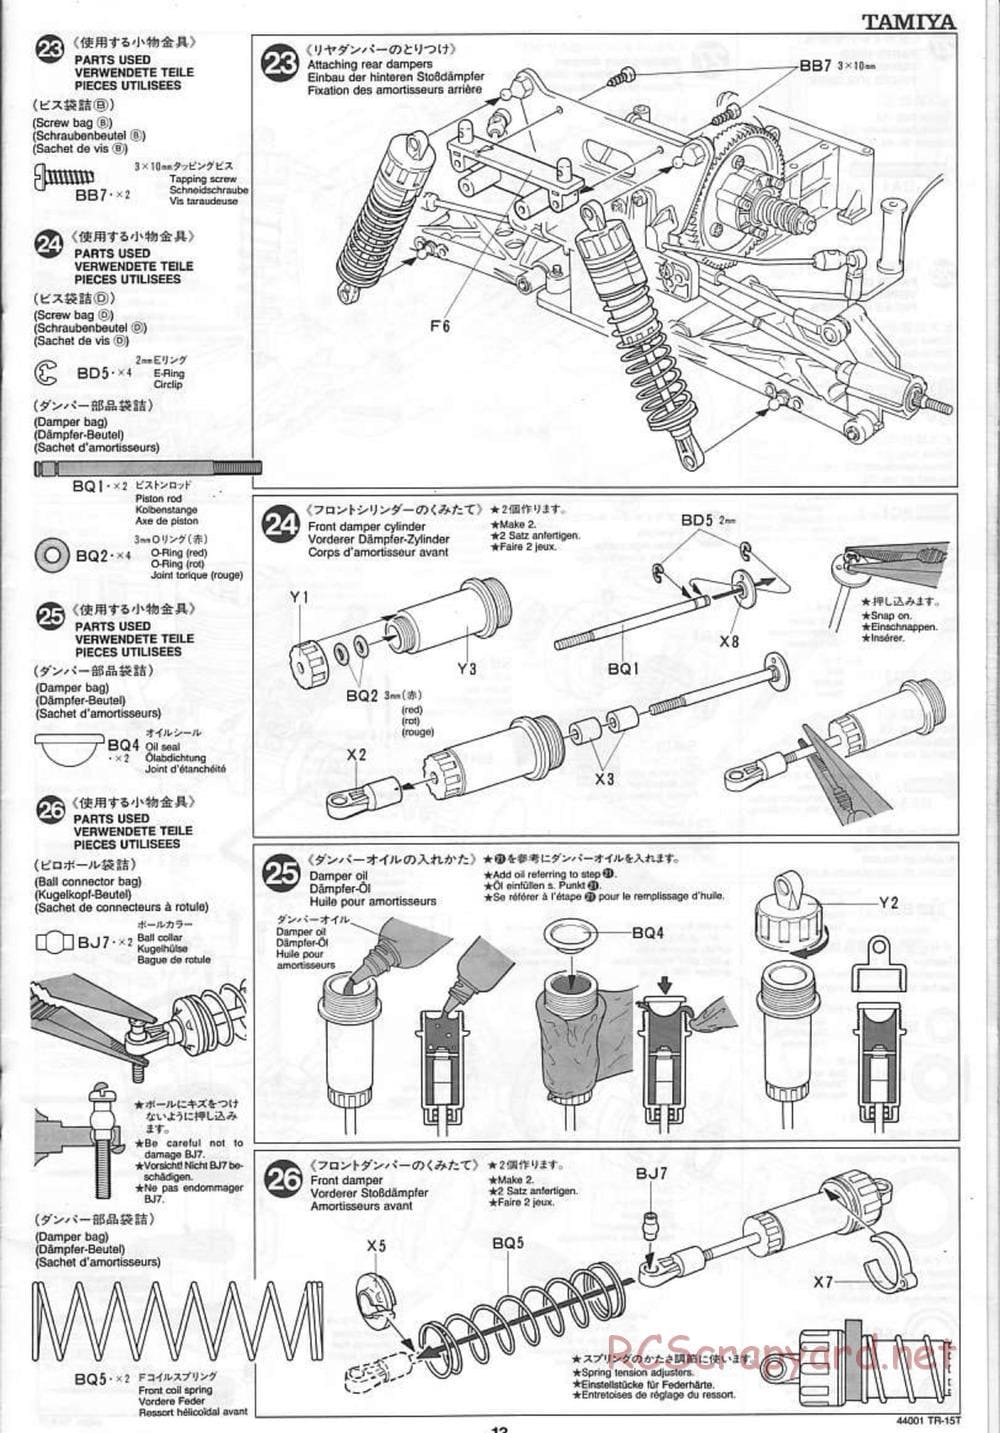 Tamiya - Stadium Racing Truck TR-15T Chassis - Manual - Page 13